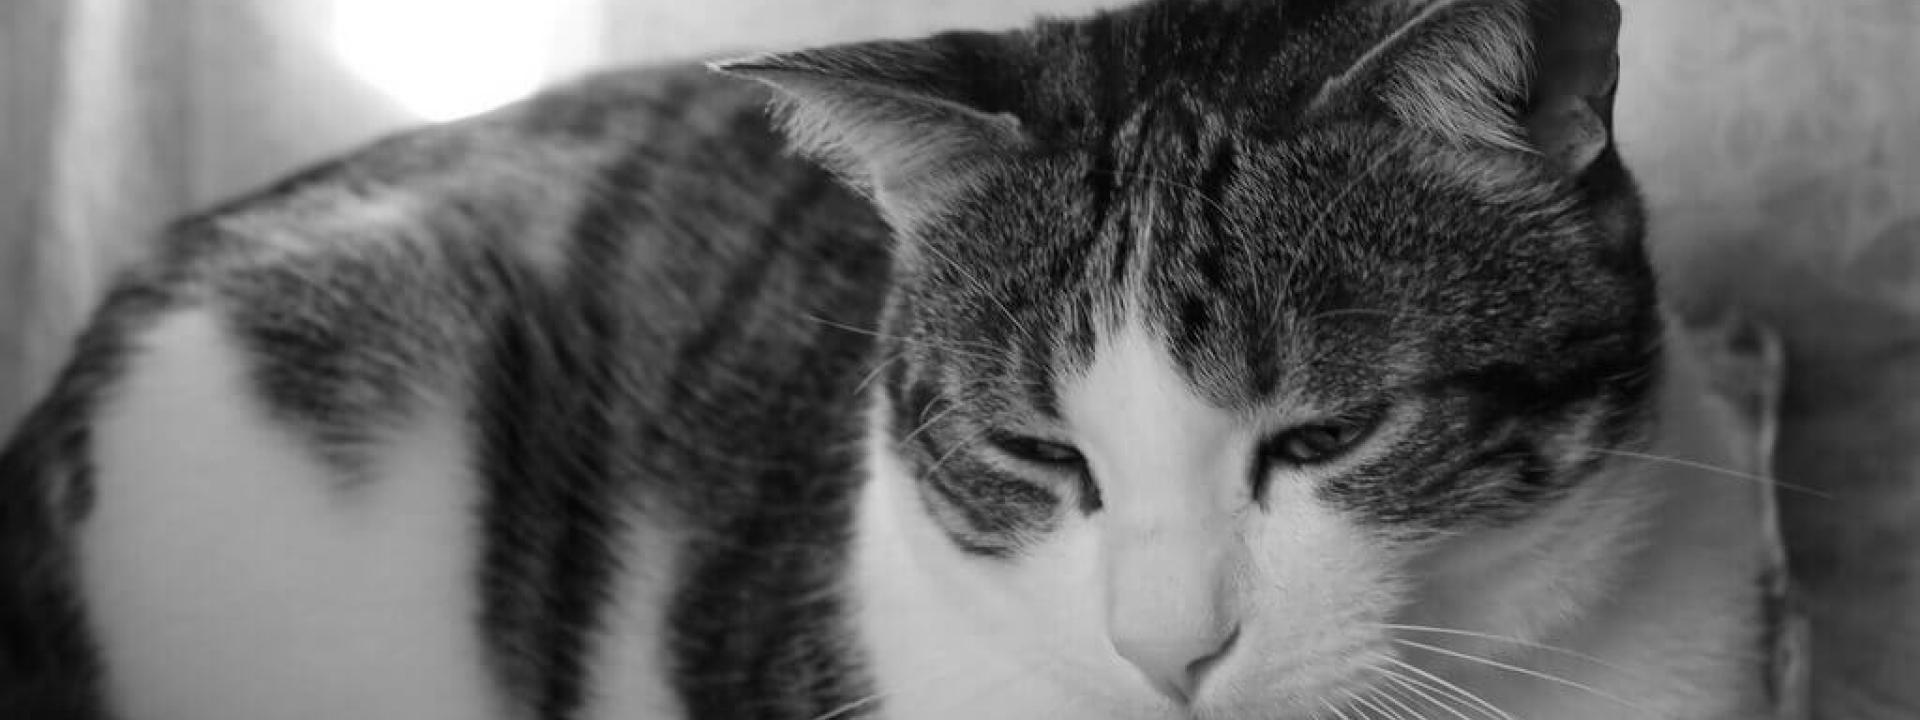 Cat-Laser-Therapy-Blog-Header.jpg